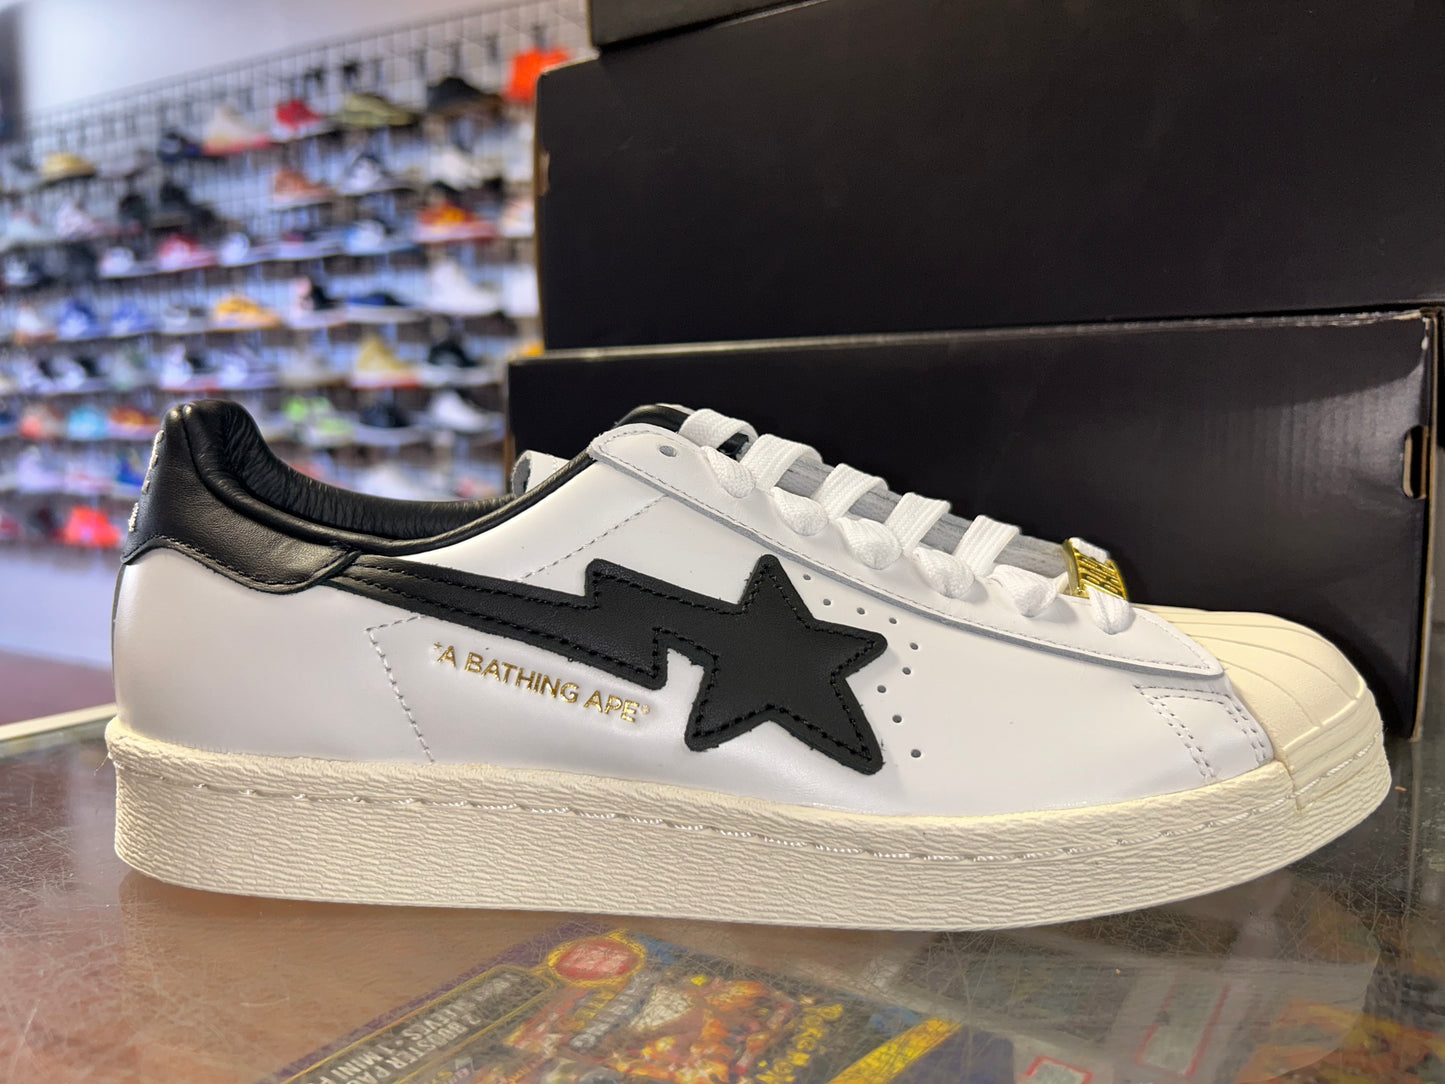 Size 6 Adidas Superstar 80s BAPE "White/Black" Brand New (MAMO)